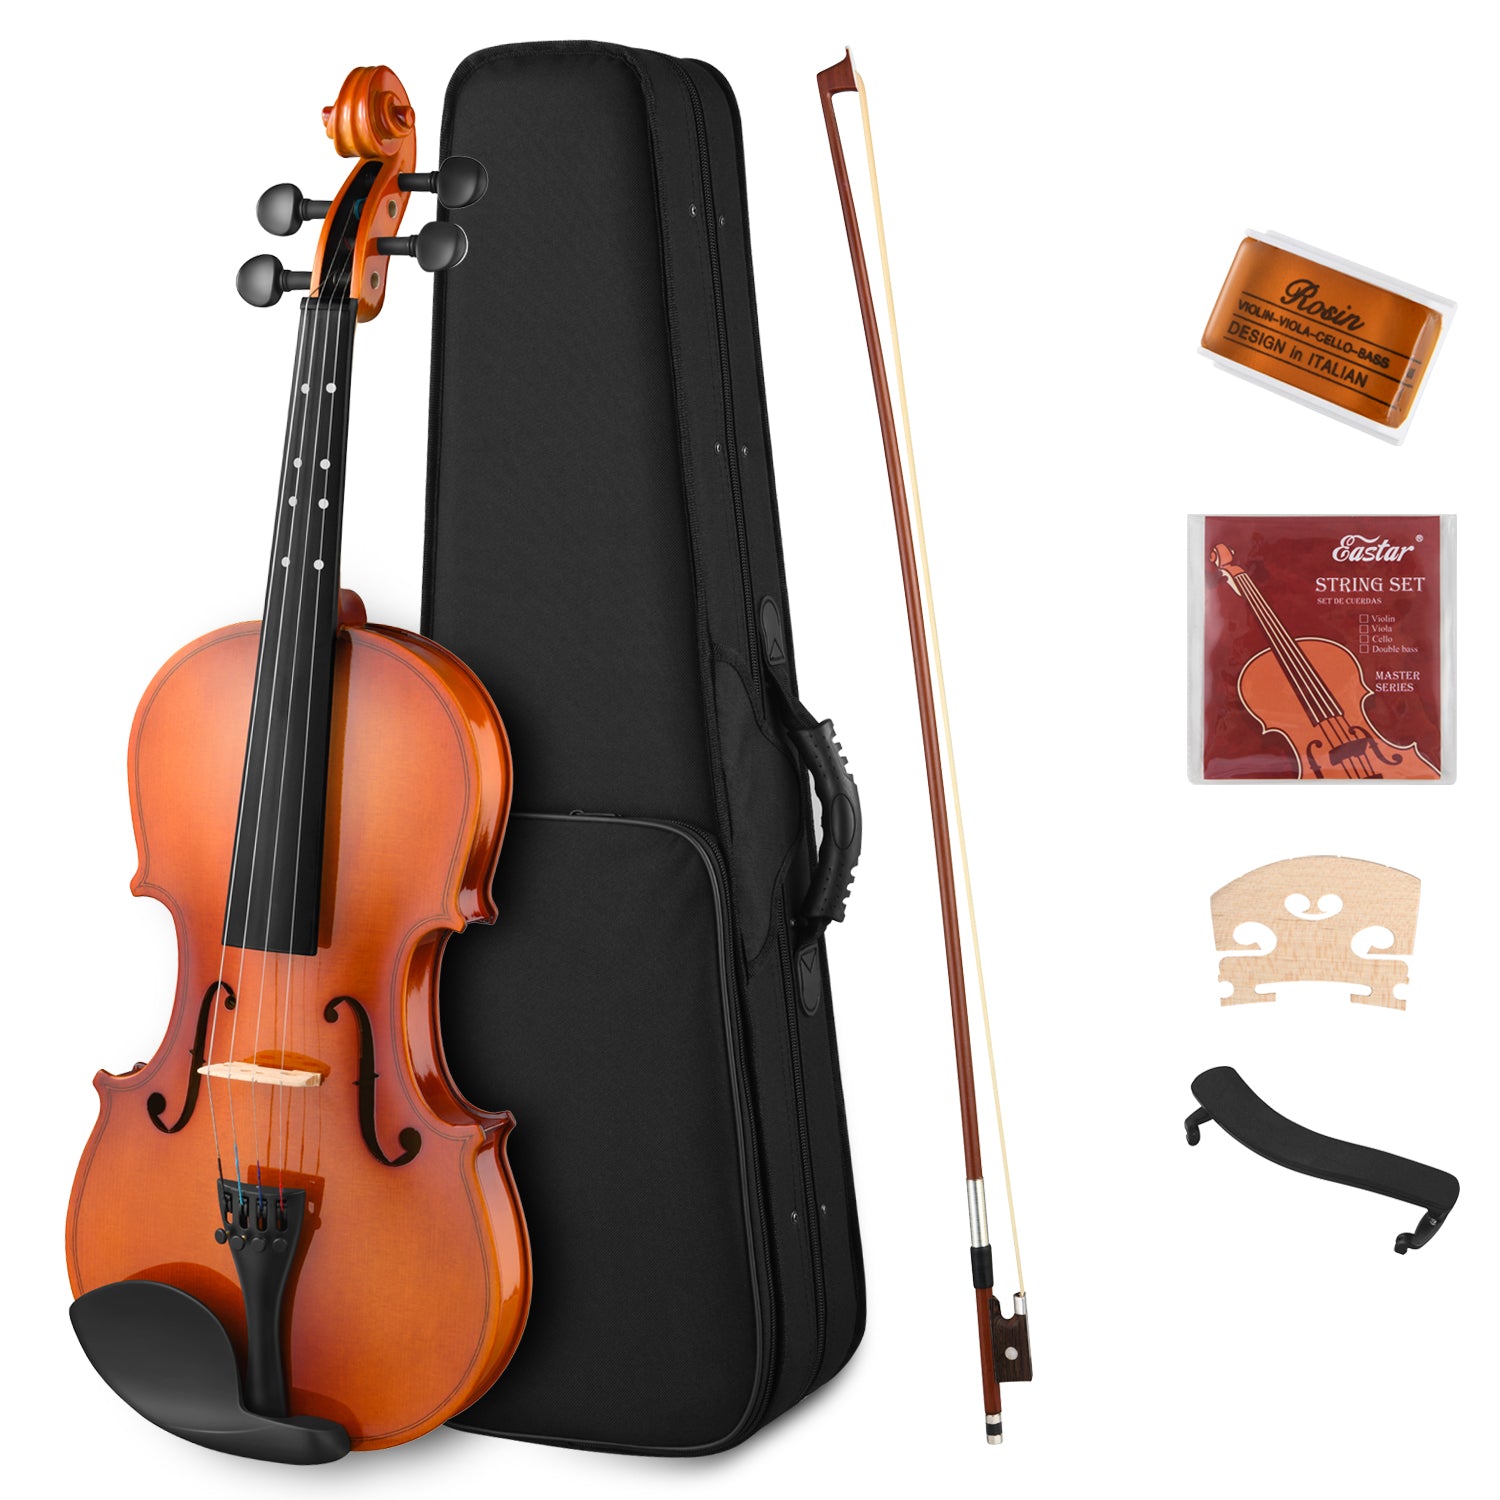 

Eastar EVA-2 4/4 Violin Set Fiddle for Kids Beginners Students with Hard Case, Rosin, Shoulder Rest, Bow, and Extra Strings (Imprinted Finger Guide on Fingerboard)